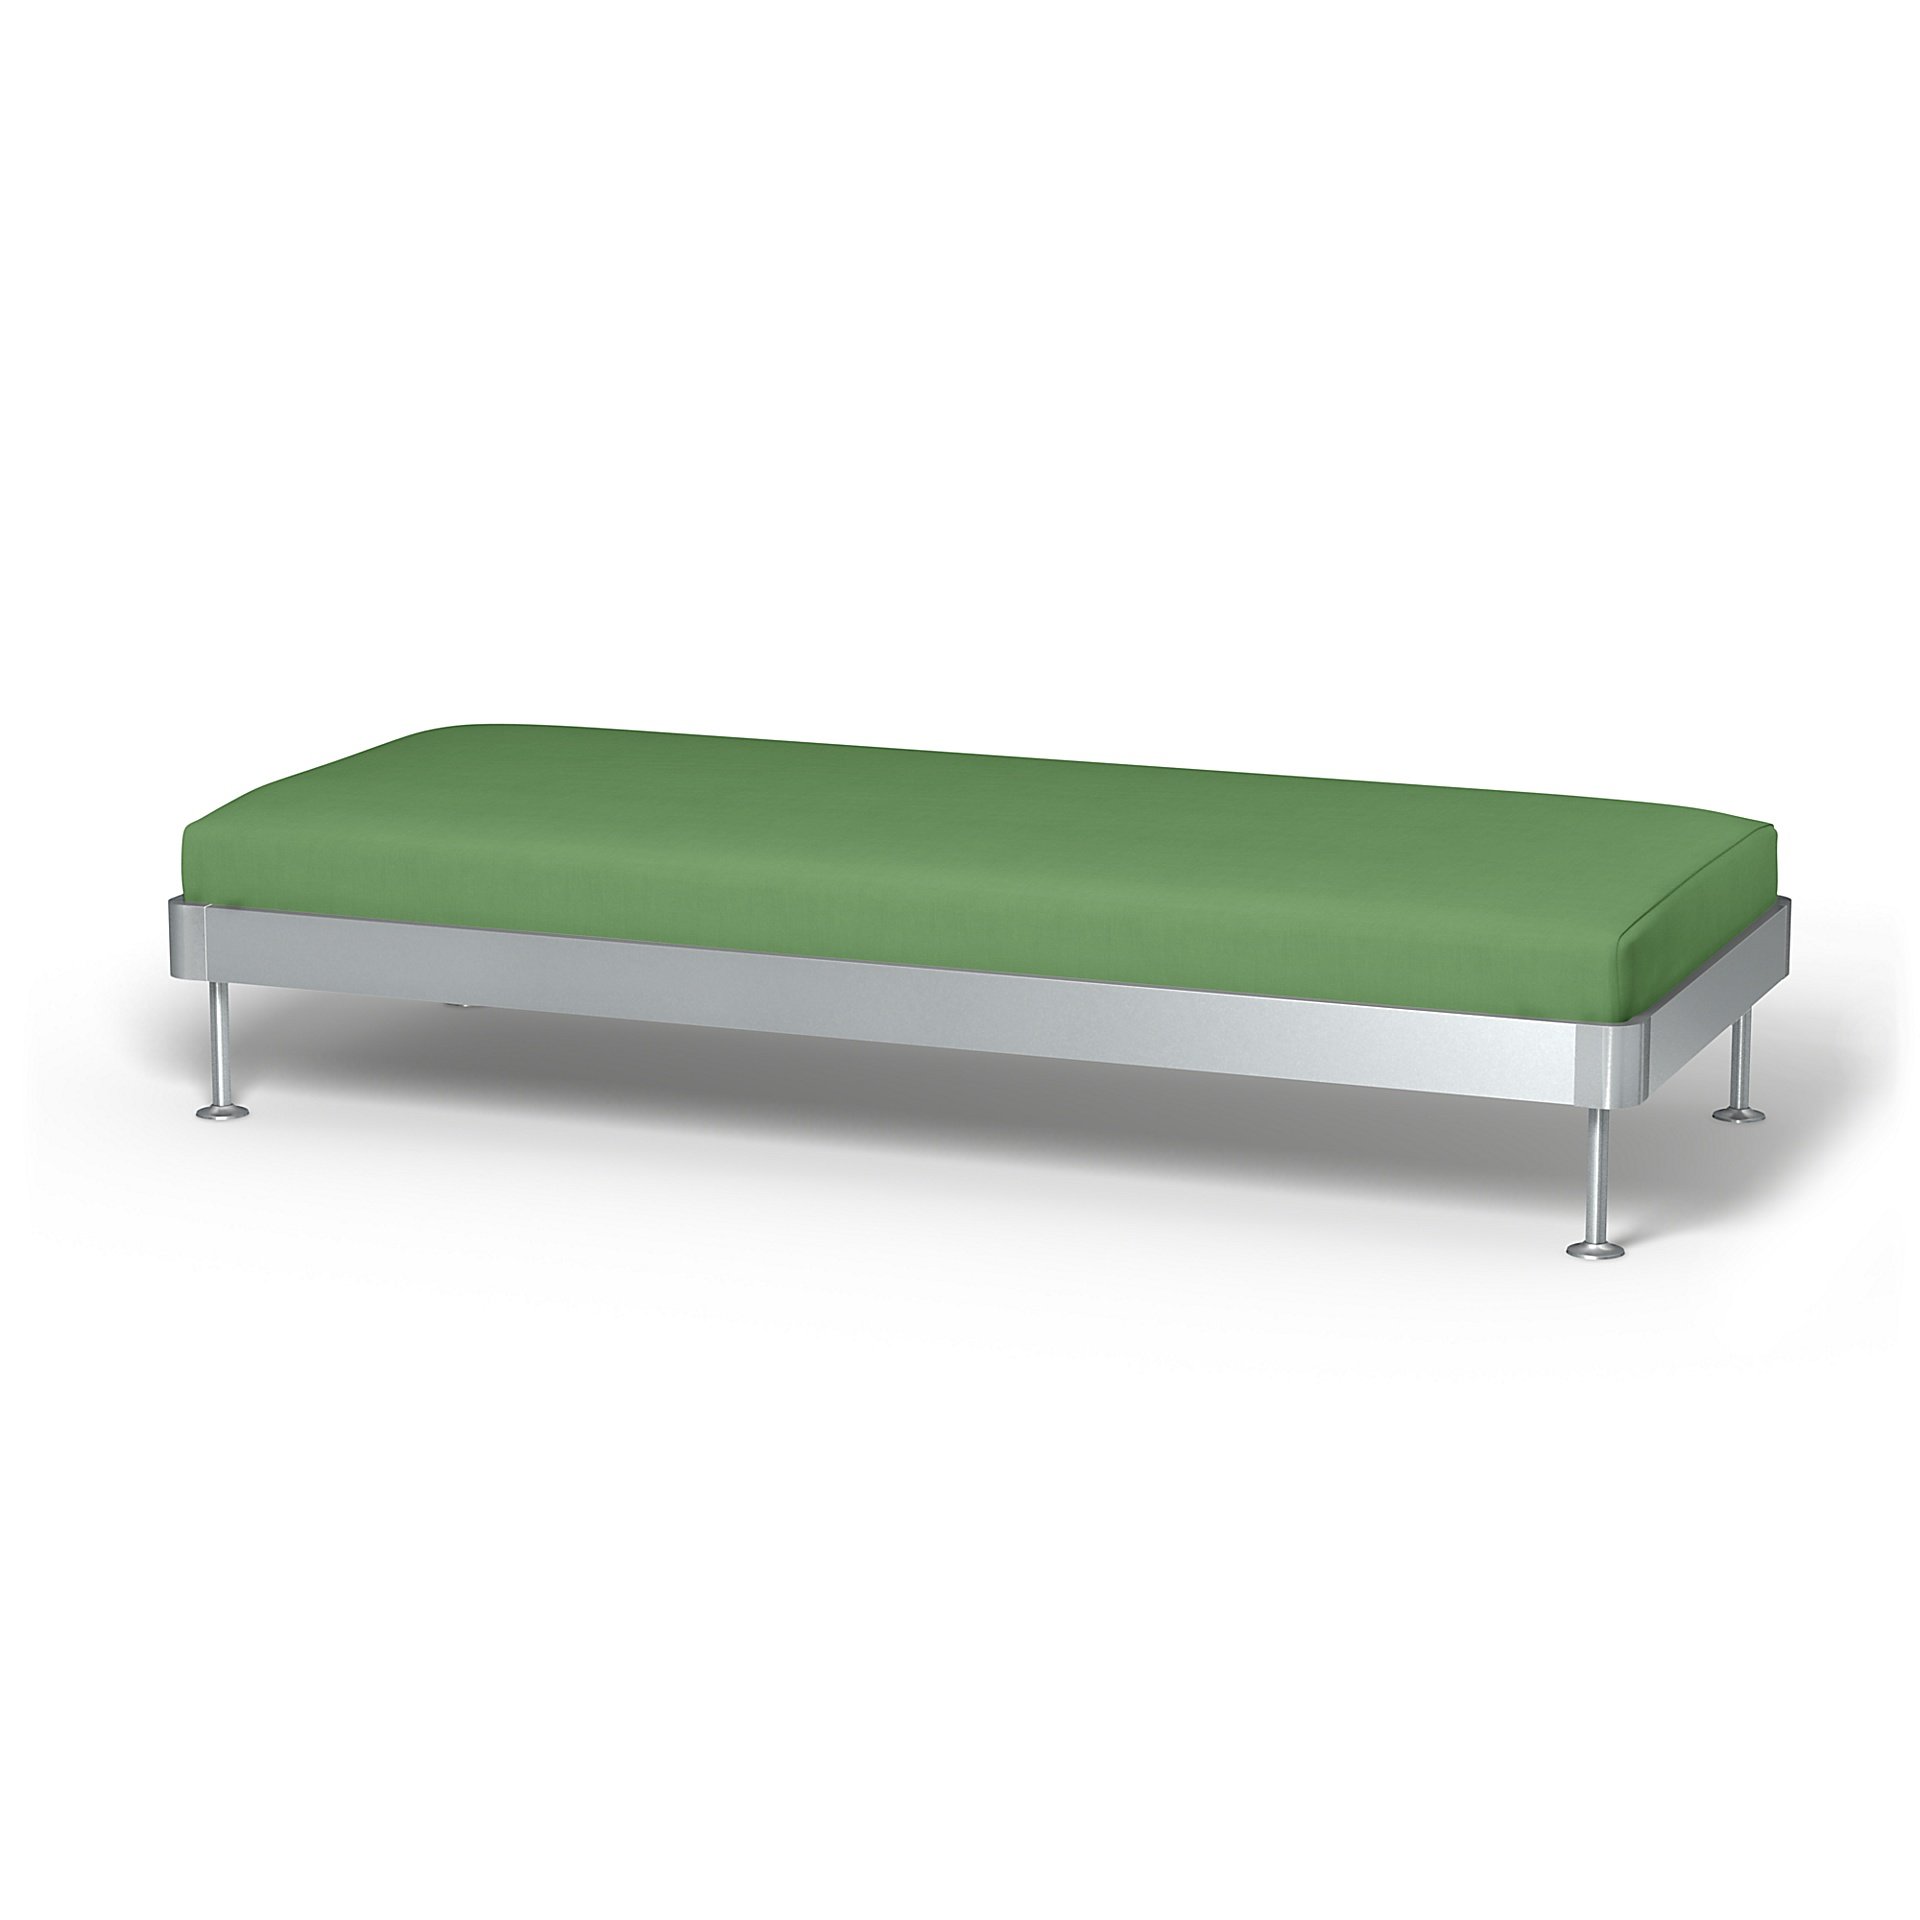 IKEA - Delaktig 3 Seat Platform Cover, Apple Green, Linen - Bemz